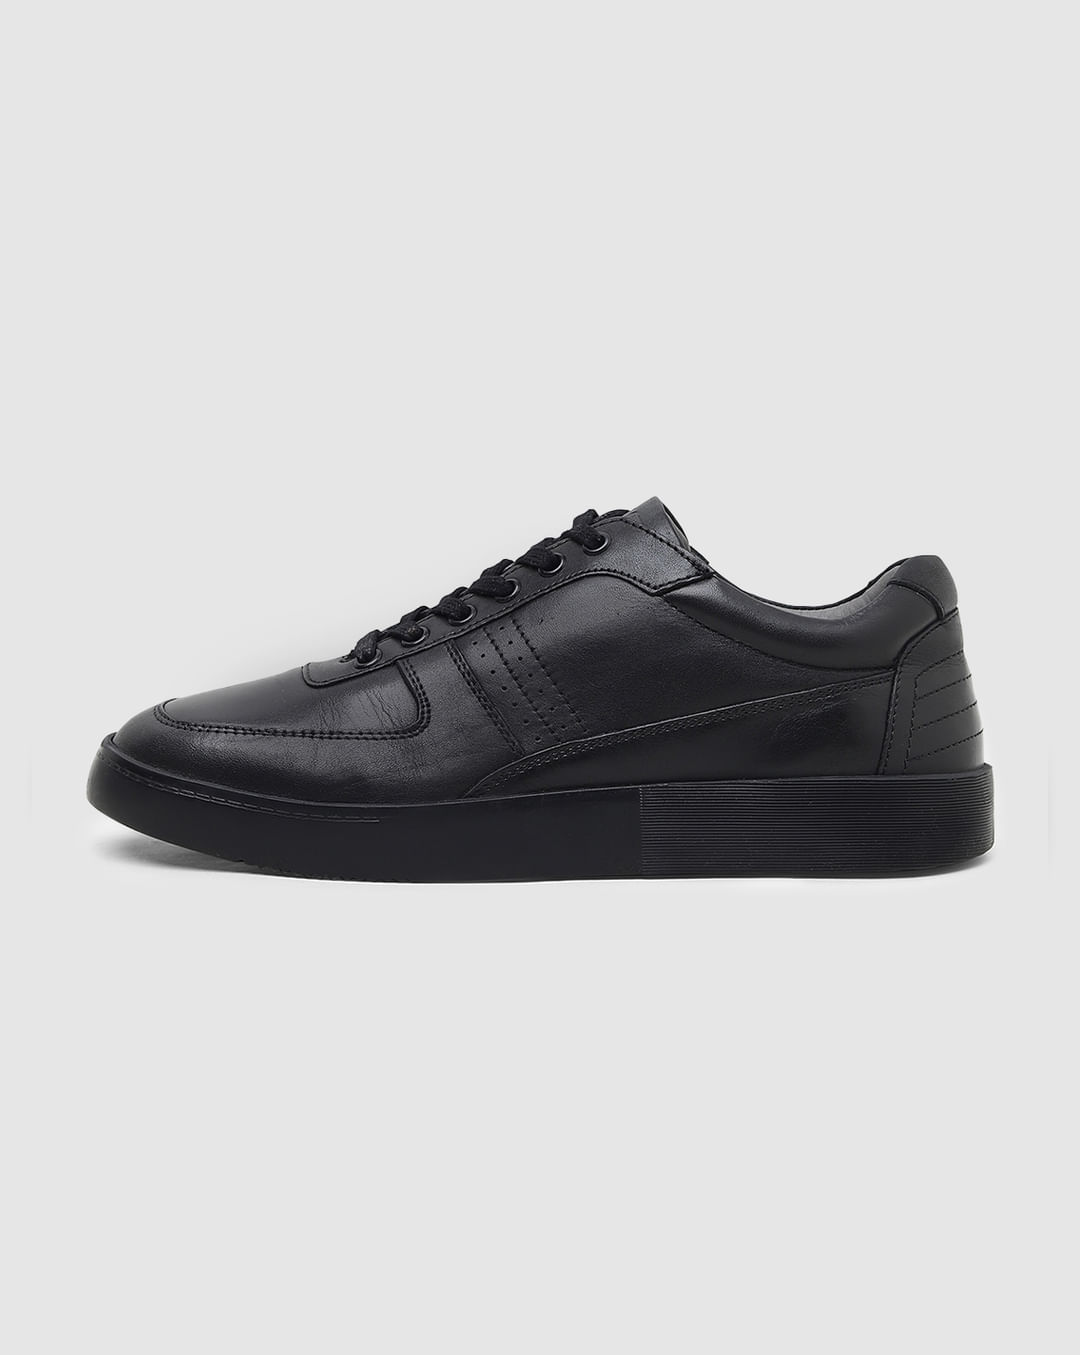 Men's Low Top Sneakers Shoes Black